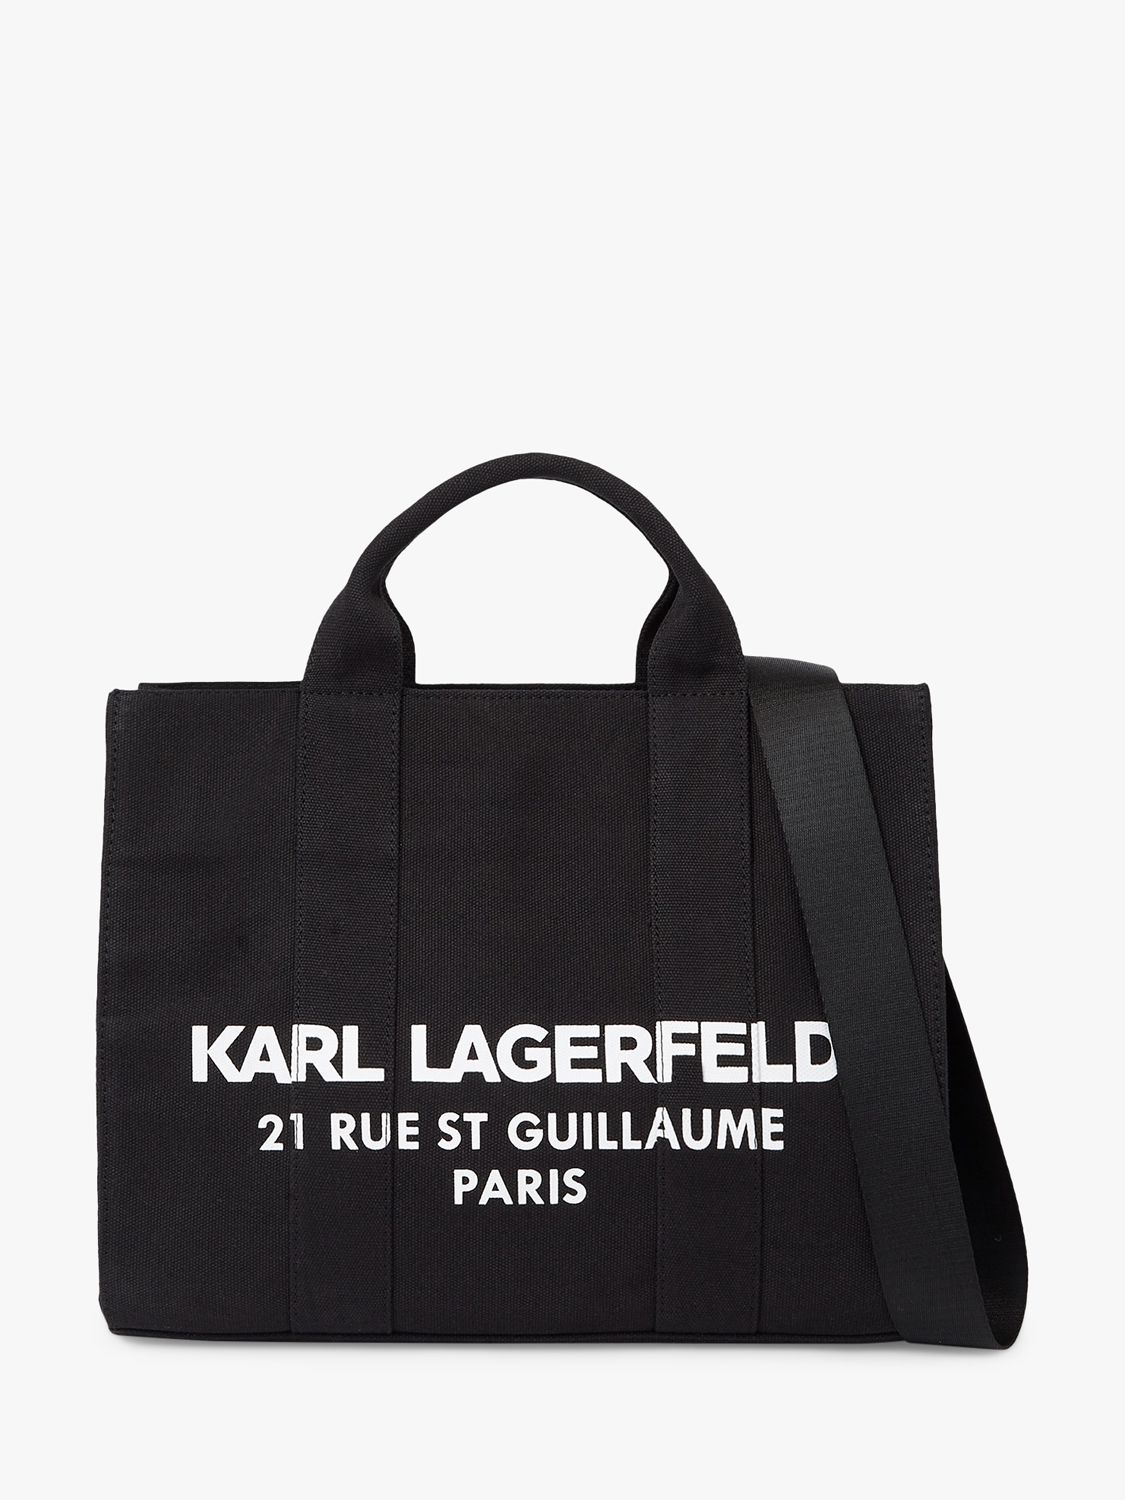 KARL LAGERFELD Canvas Shopper Bag, Black at John Lewis & Partners